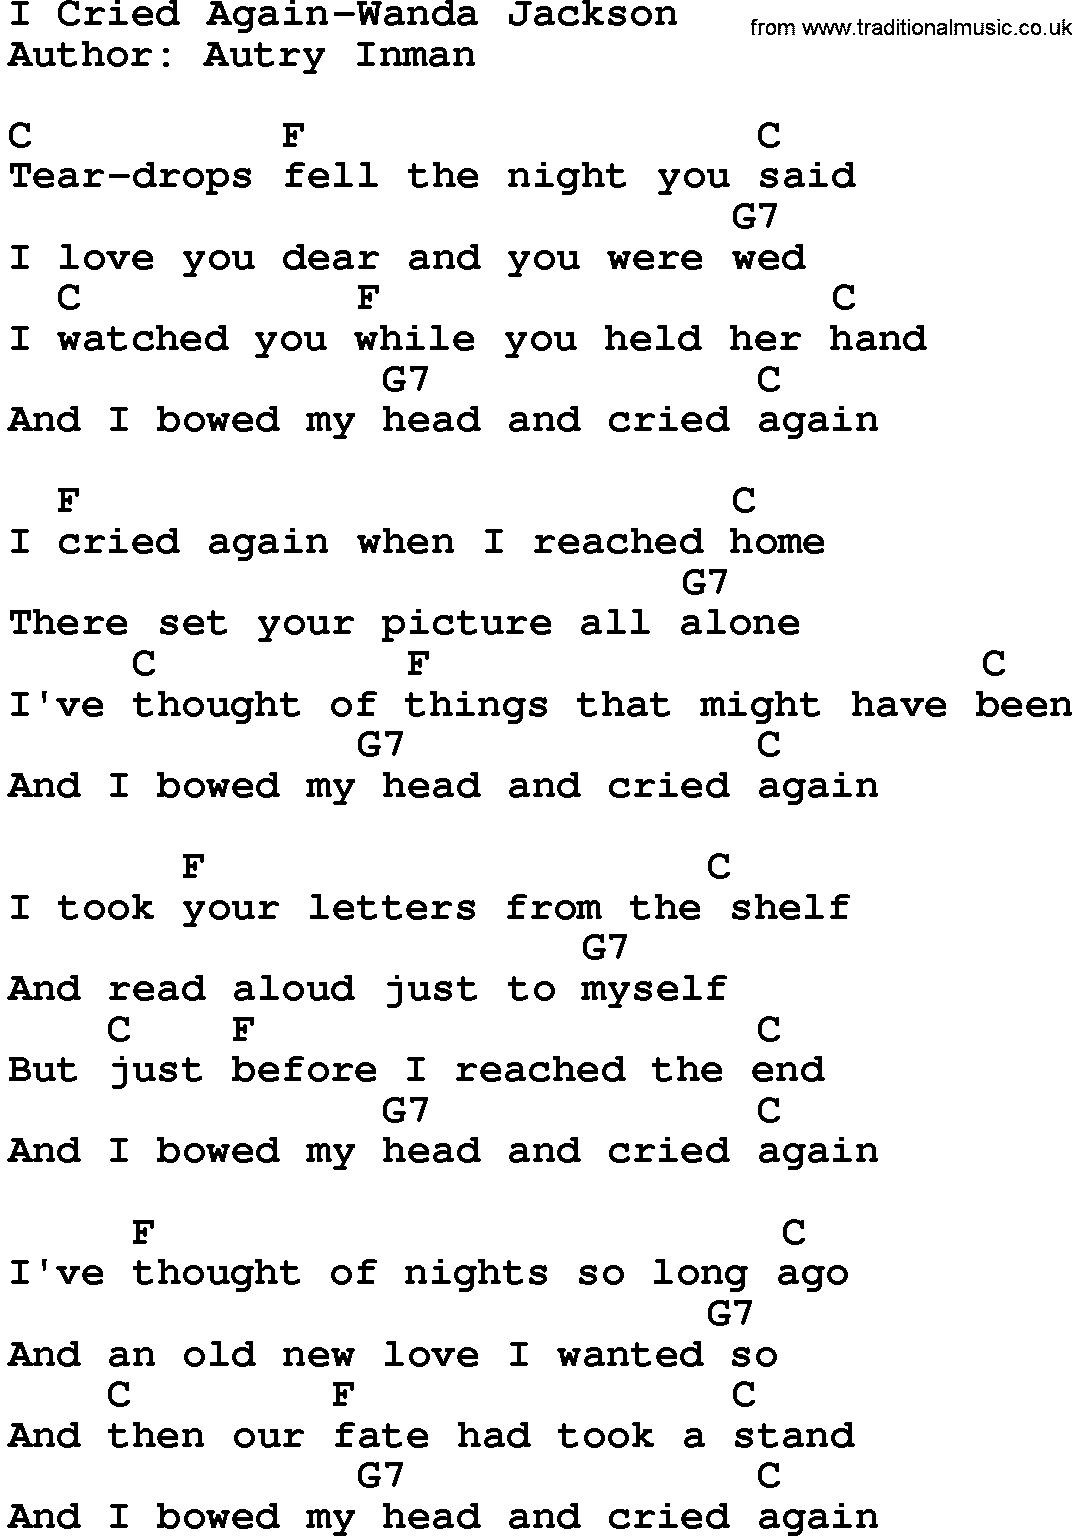 Country music song: I Cried Again-Wanda Jackson lyrics and chords